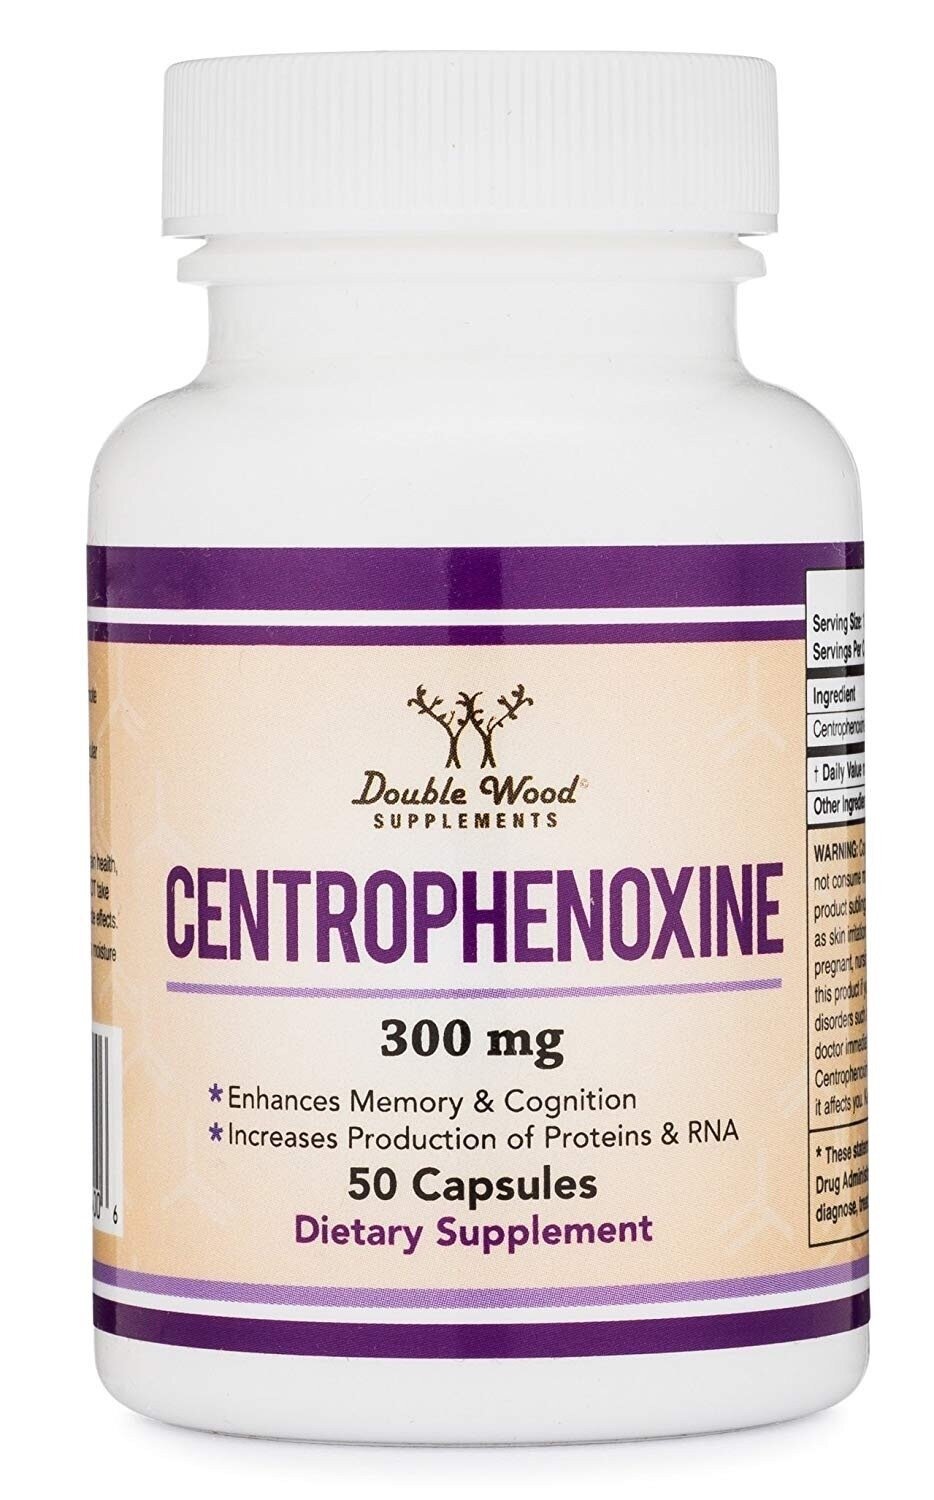 CENTROPHENOXINE